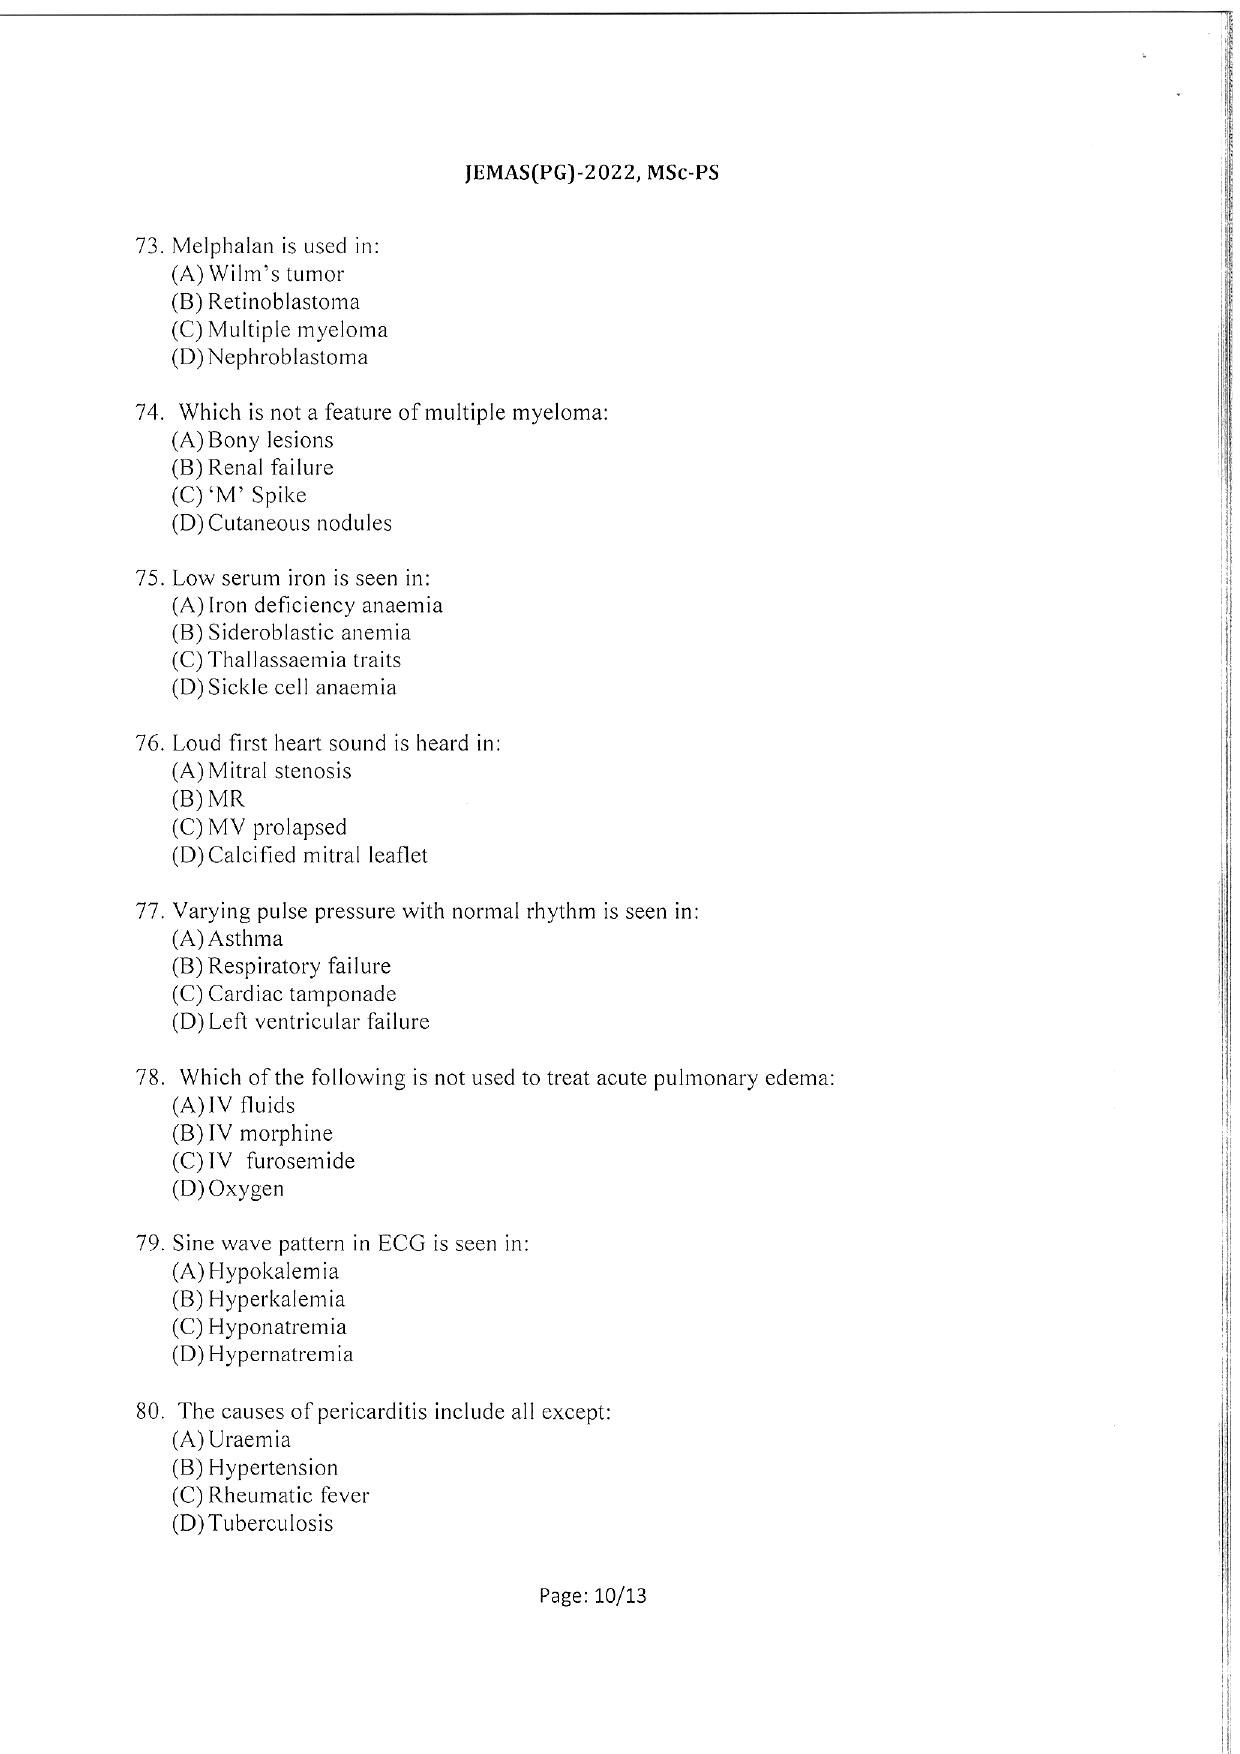 WBJEEB JEMAS (PG) 2022 MSc PS Question Paper - Page 12